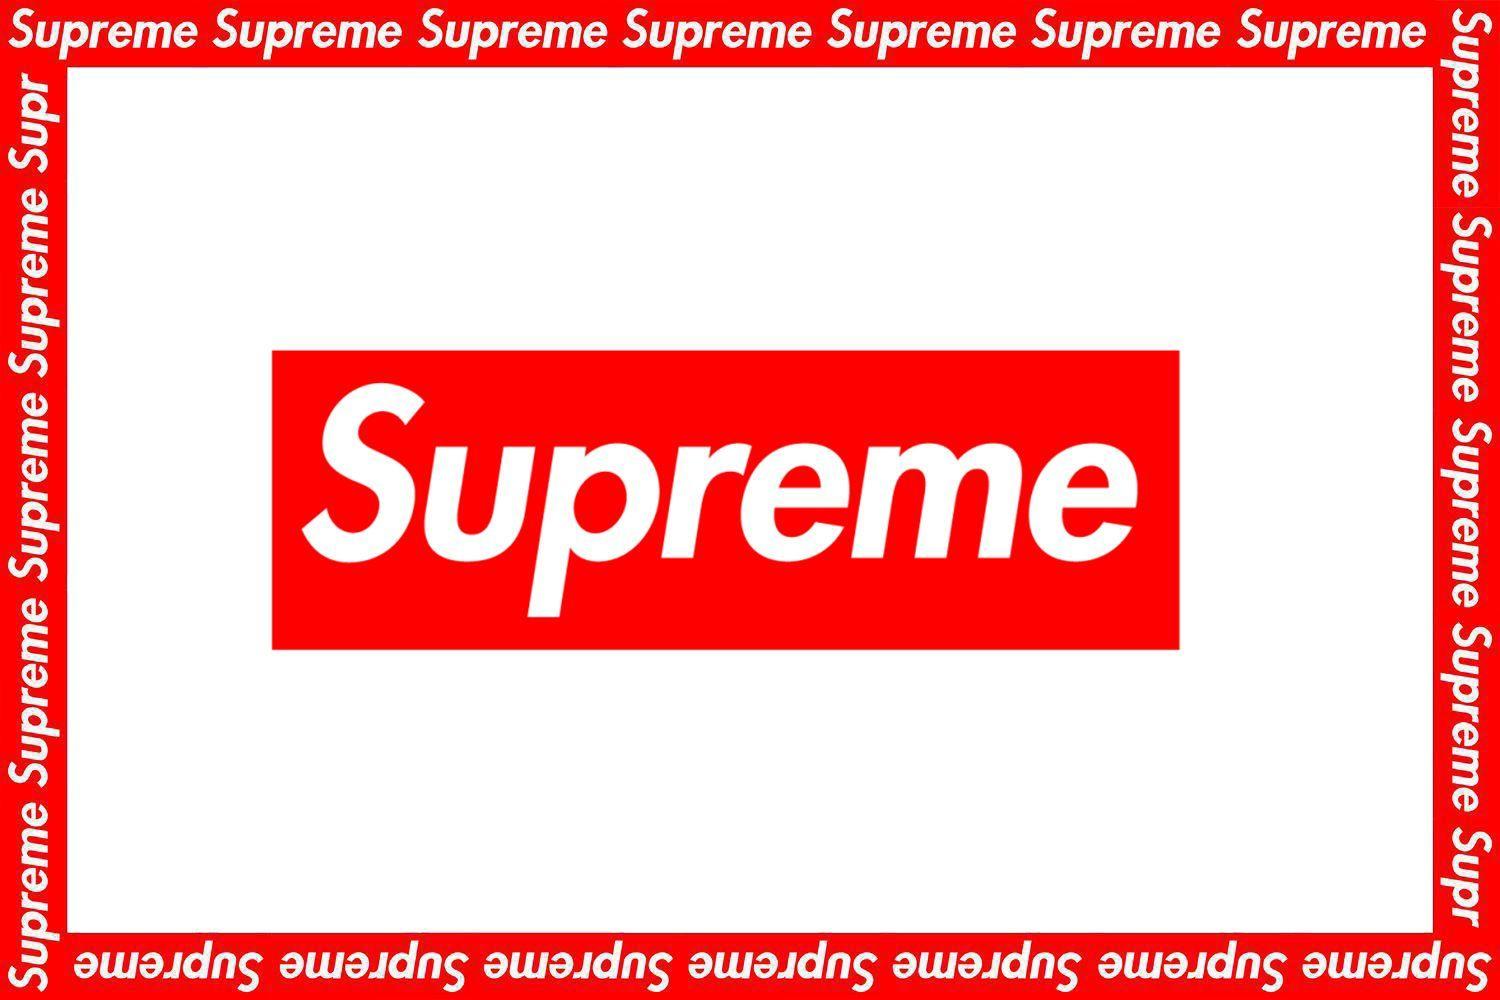 Supreme Logo - The troubled history of Supreme's boxlogo trademark registration